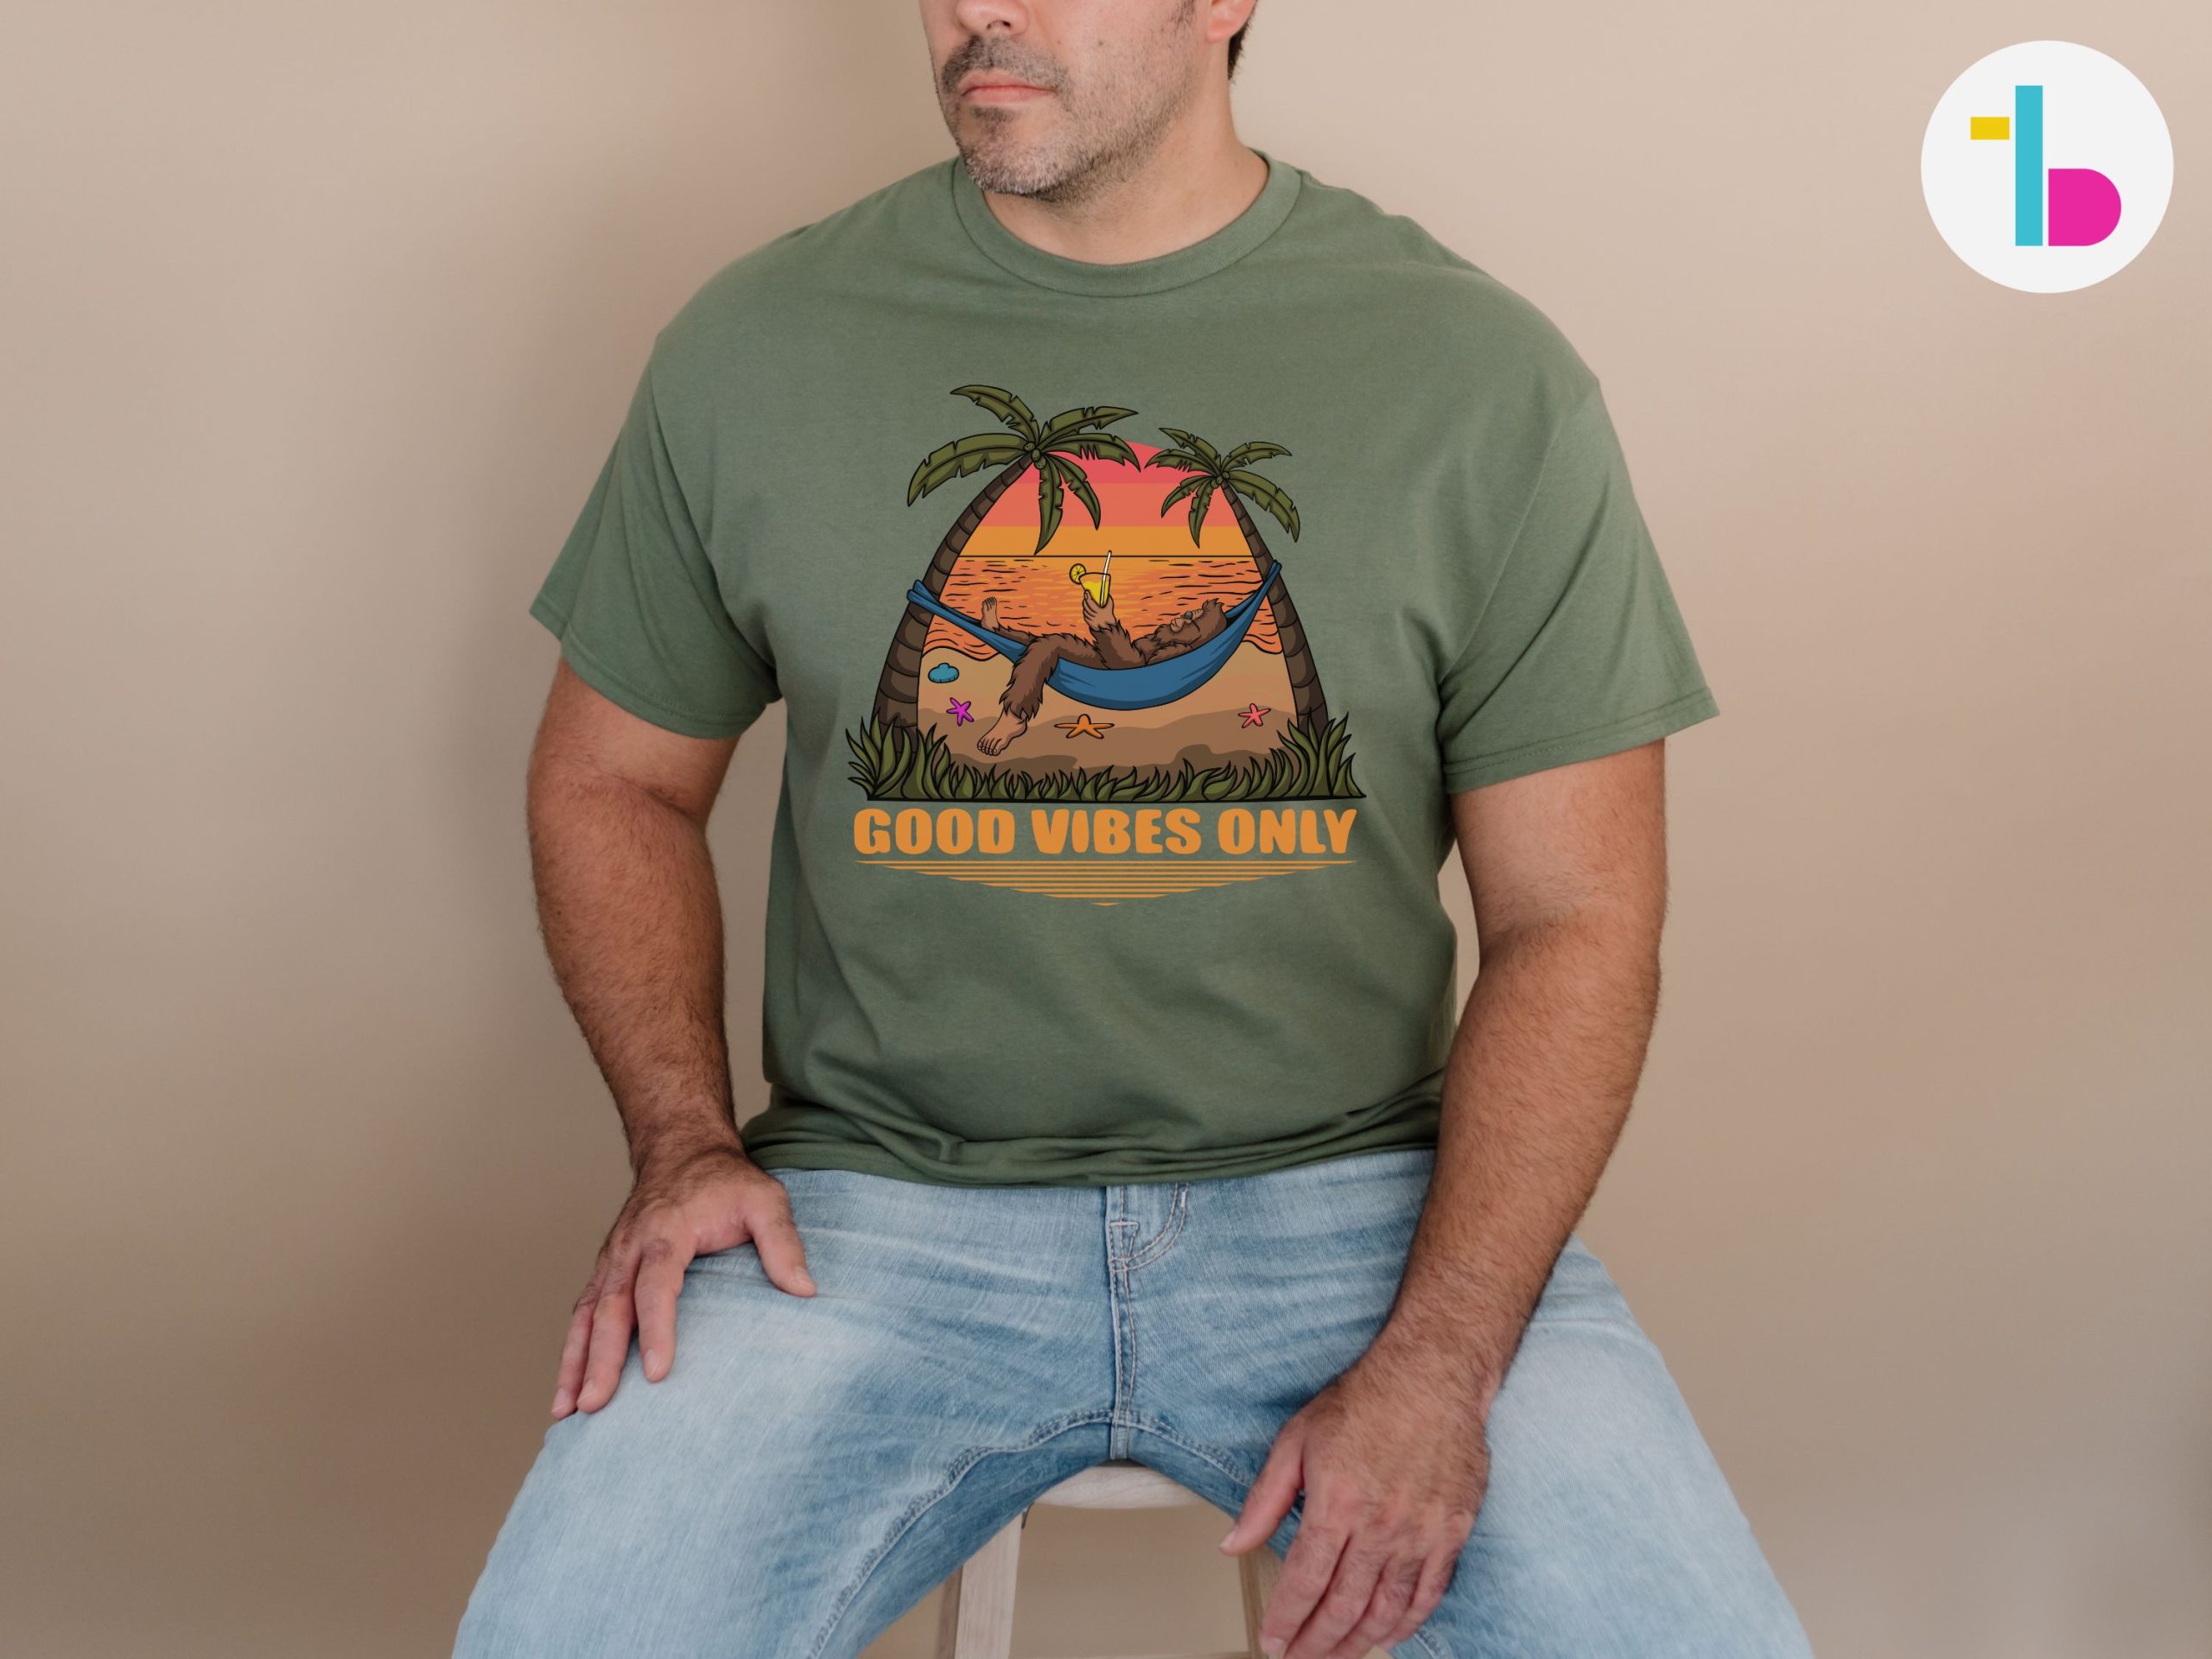 Bigfoot on holiday shirt, Good vibes only, Summer shirt, Funny bigfoot tee